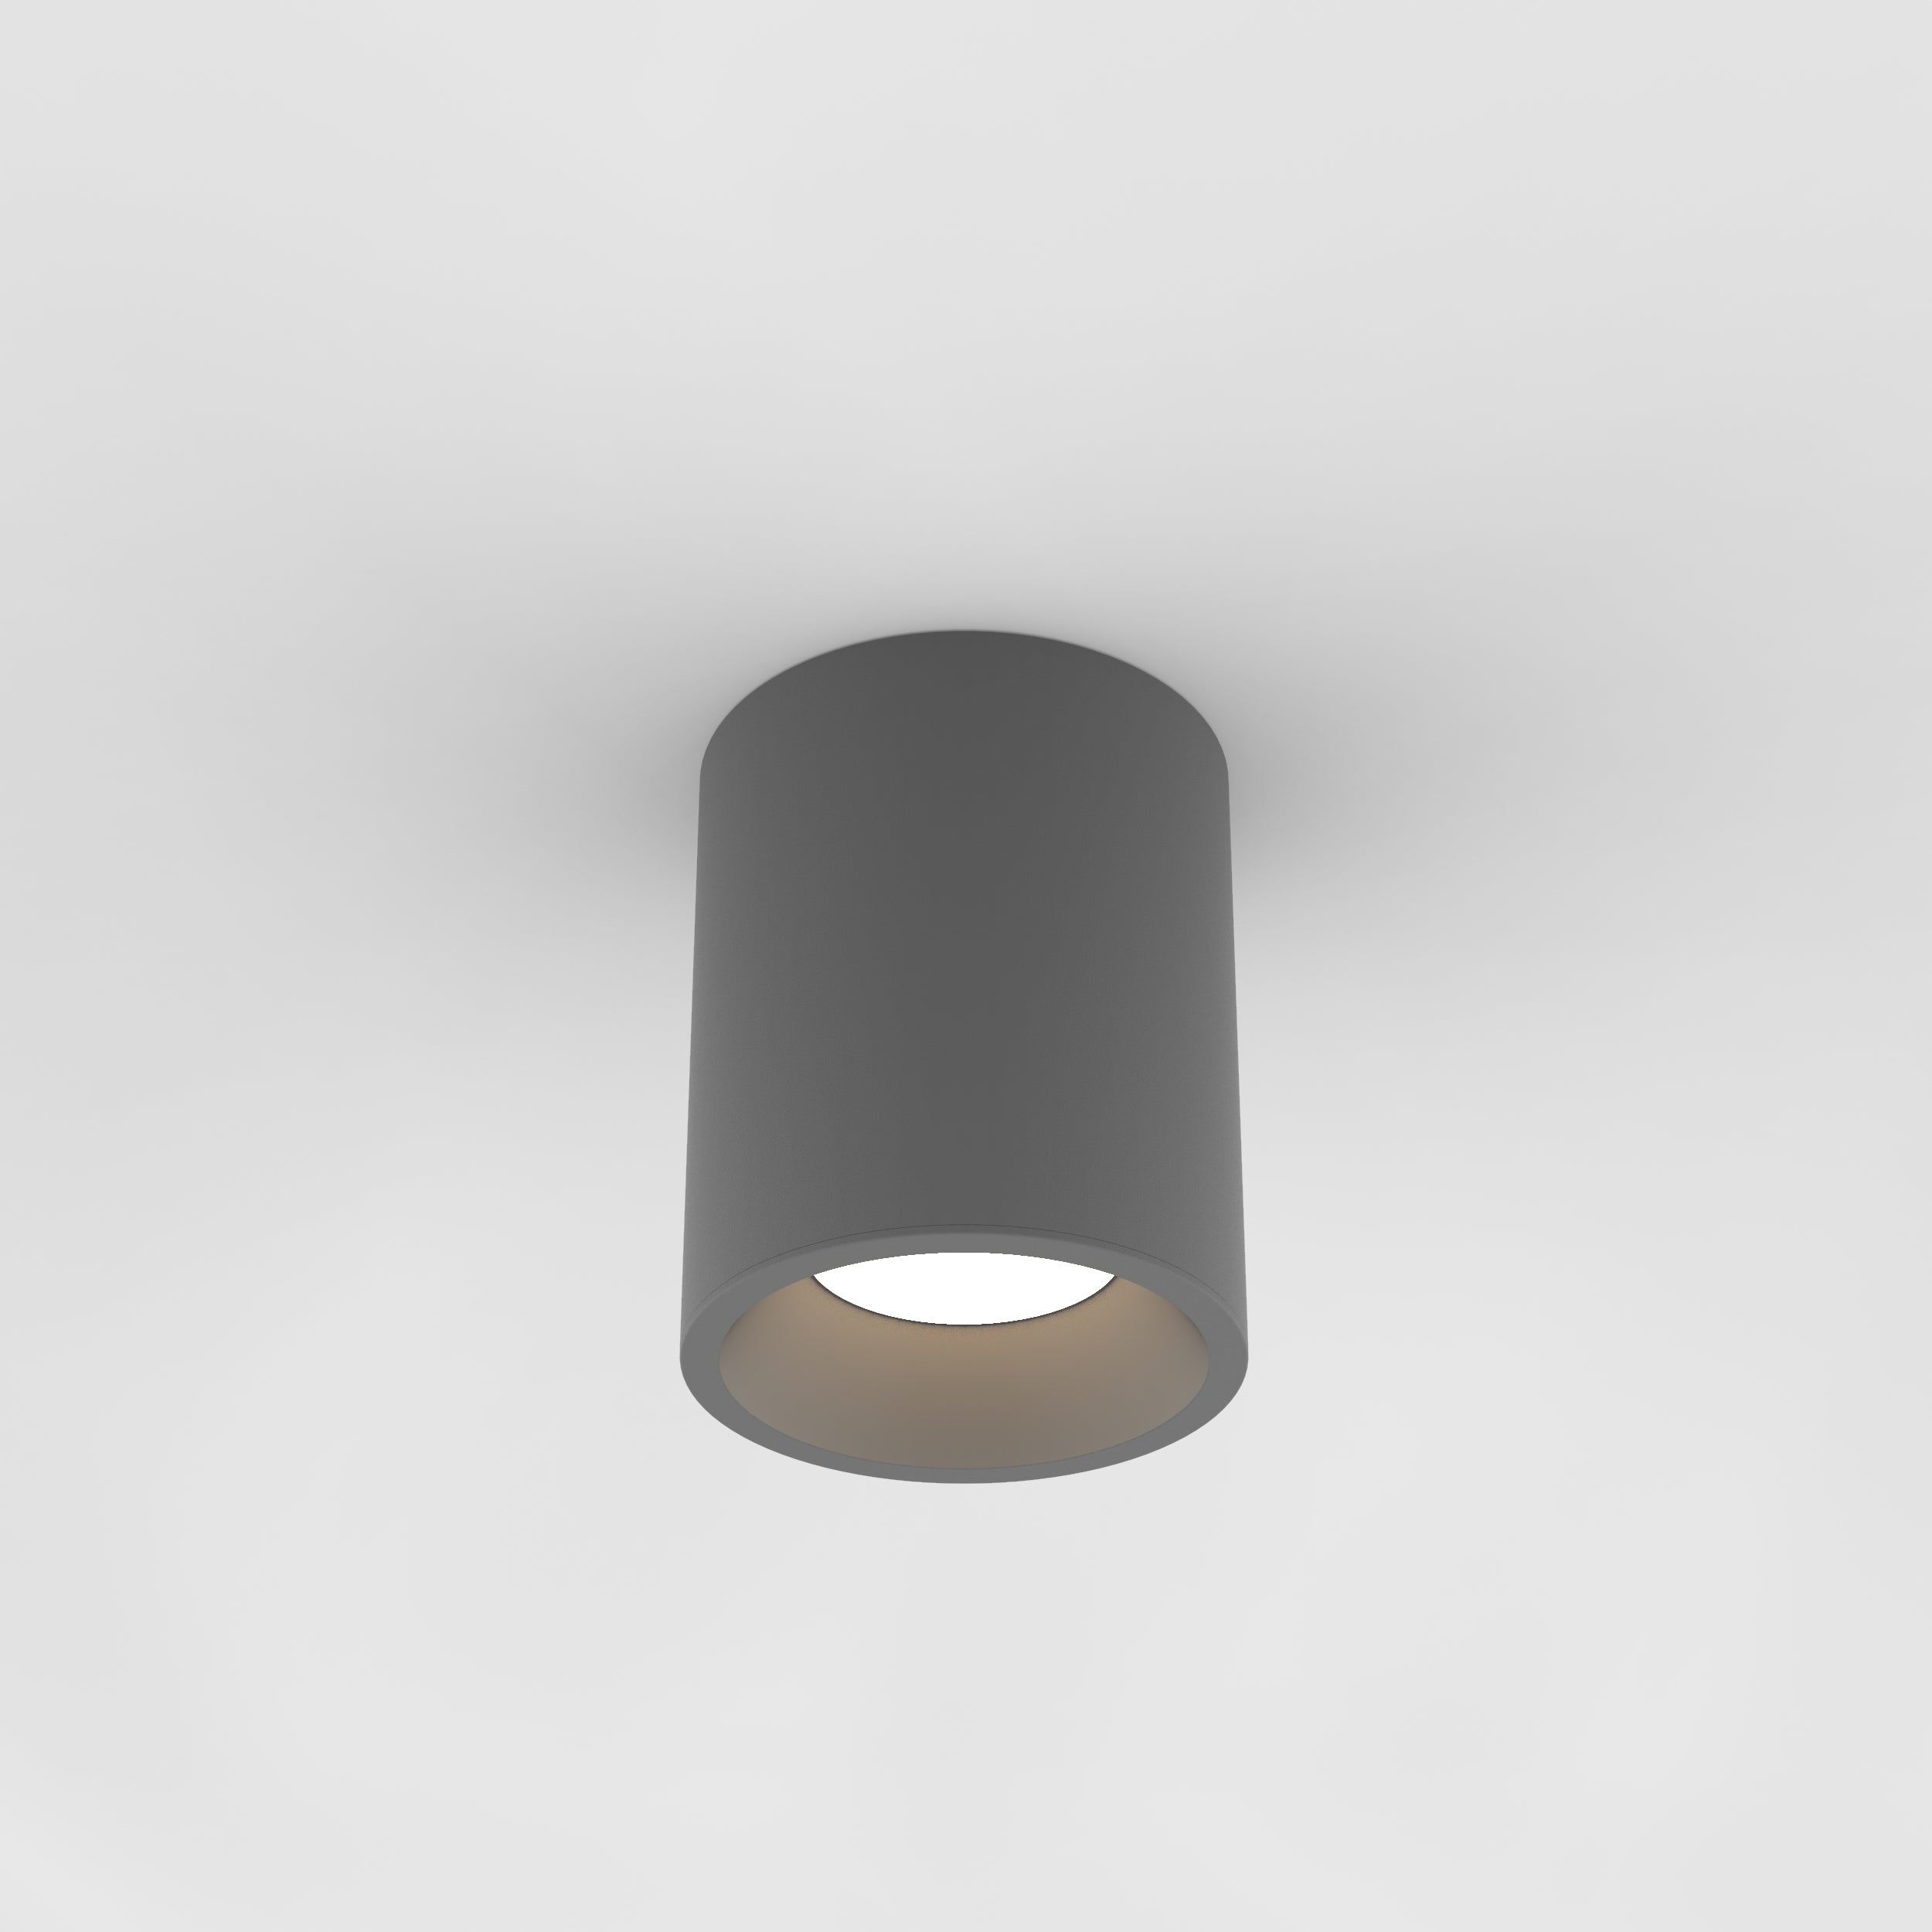 Astro Lighting Kos Round Recessed Astro Lighting xx5.59 Textured Grey Yes (Integral), AC LED Module